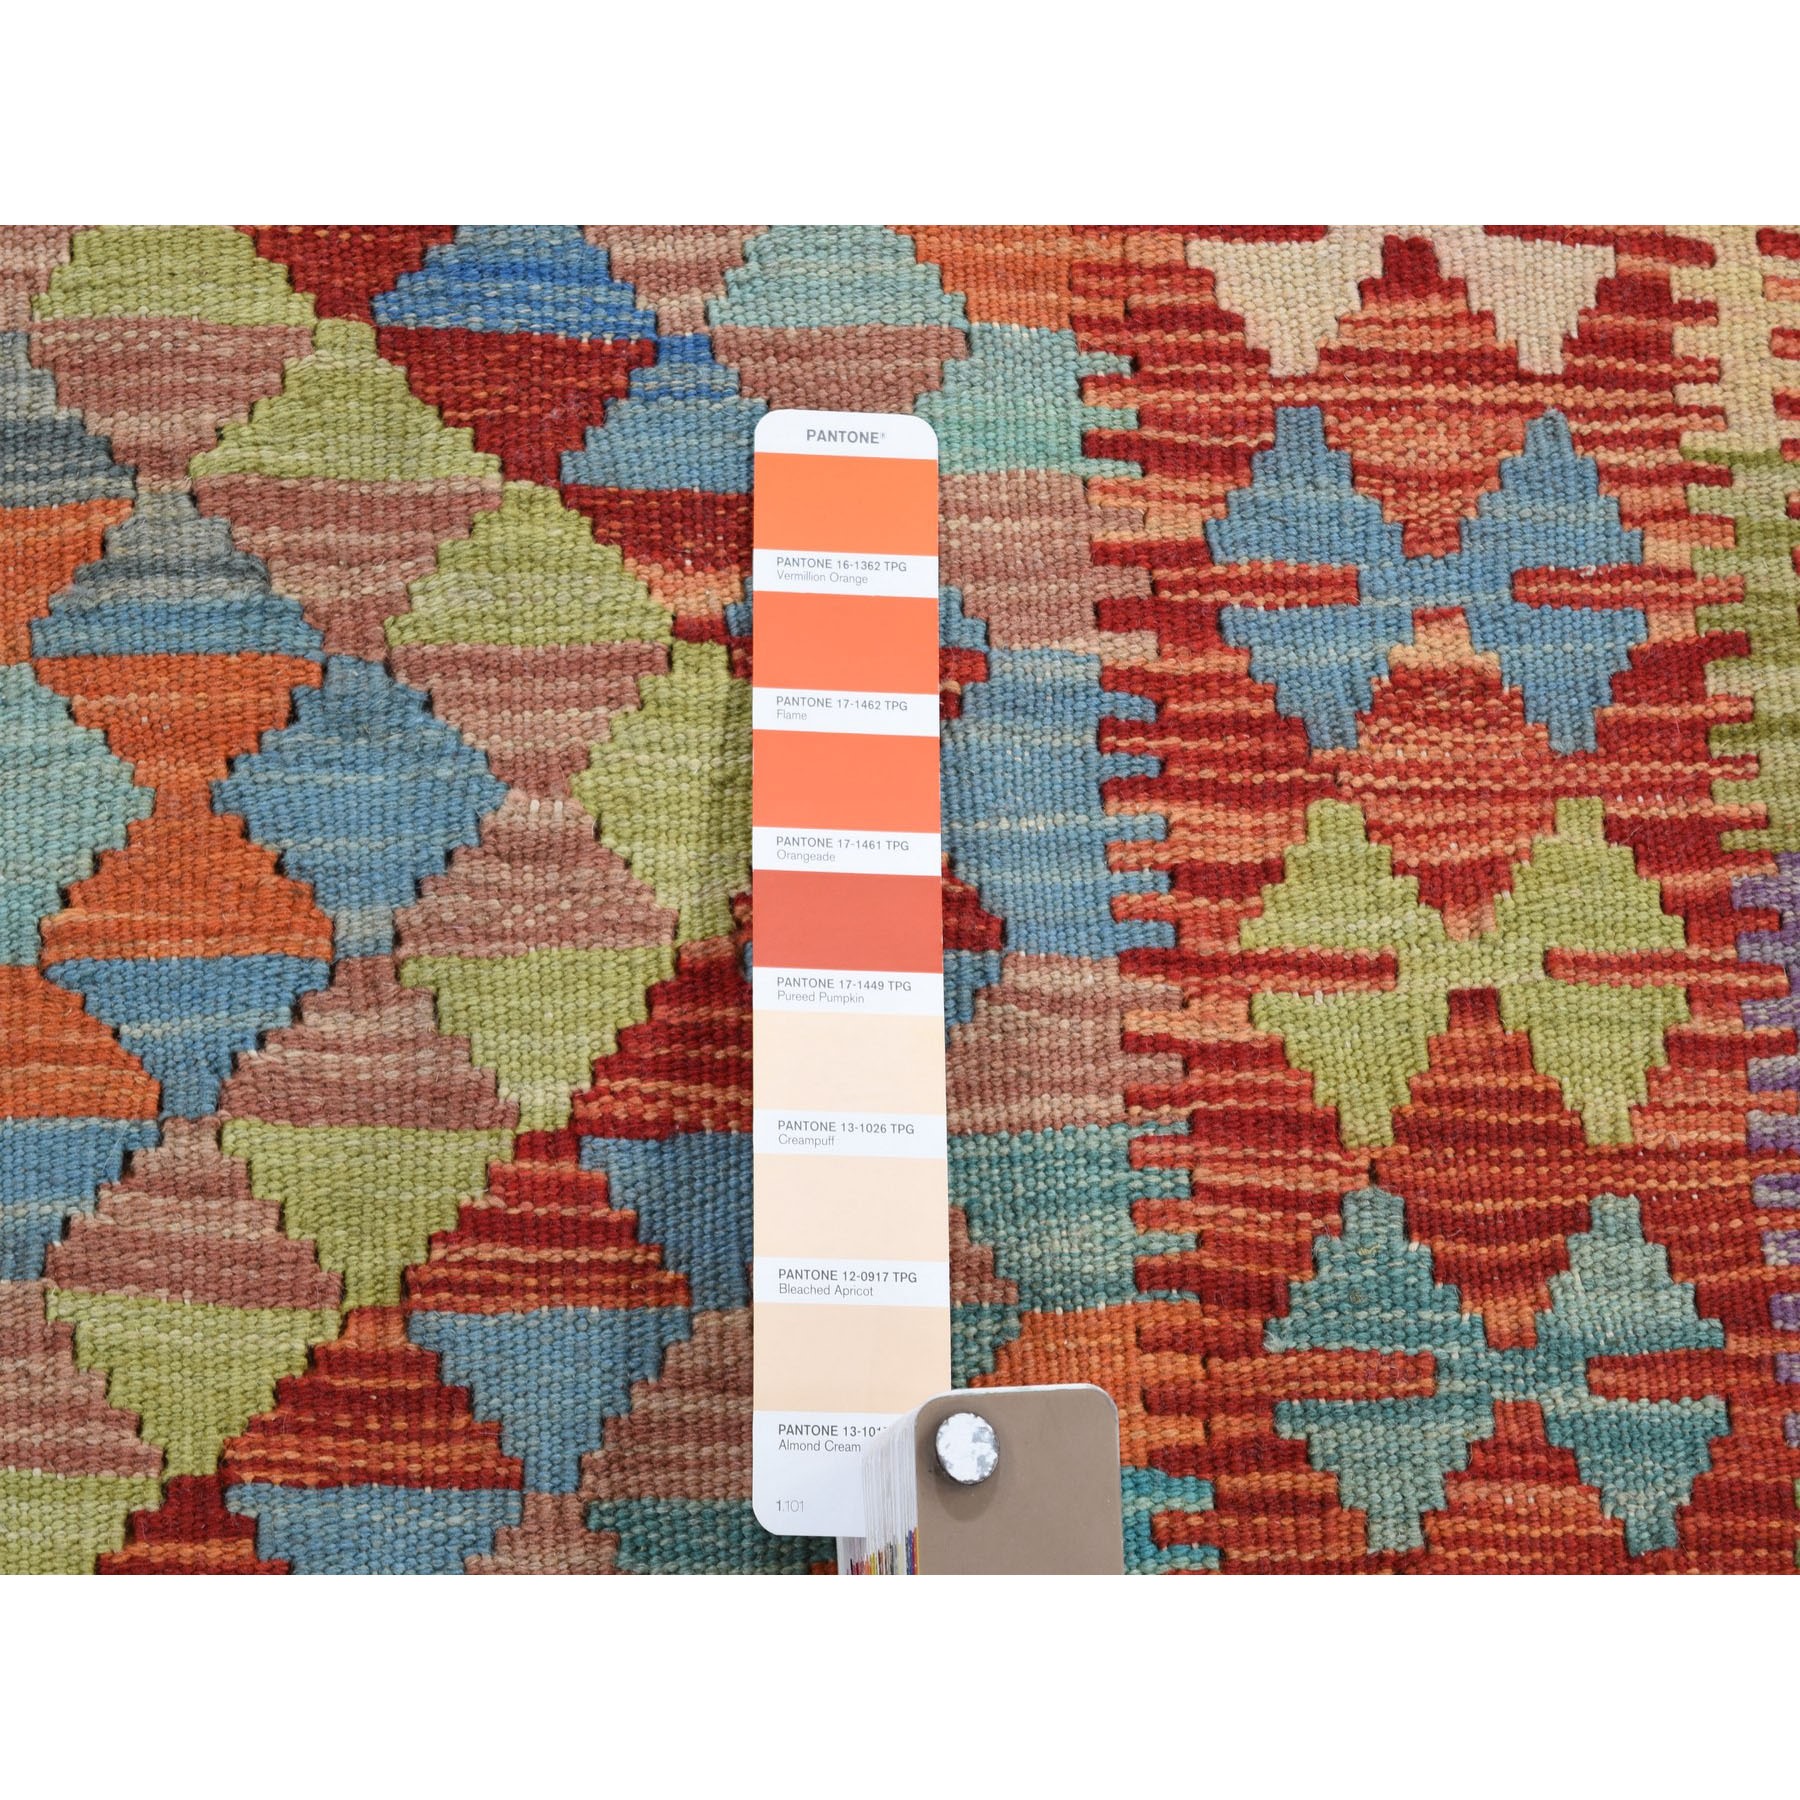 3-10 x5-9  Colorful Afghan Kilim Pure Wool Hand Woven Oriental Rug 